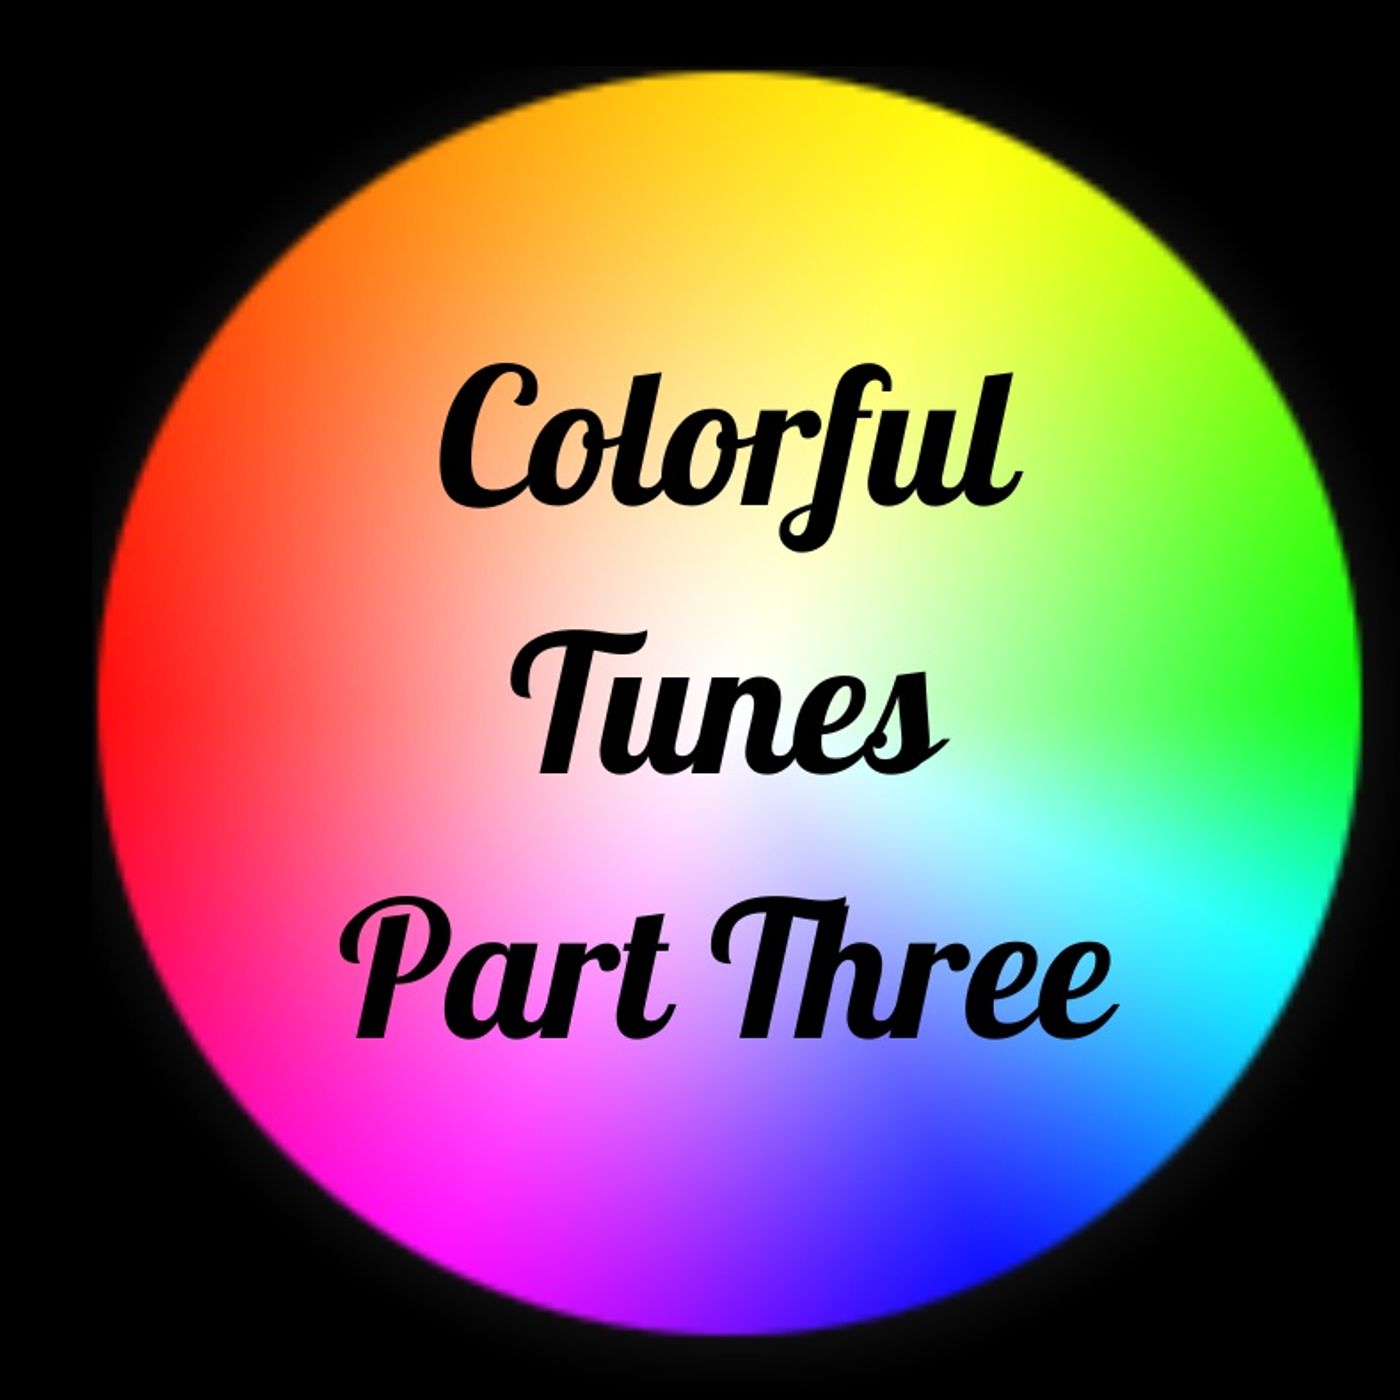 Colorful Tunes Part 3